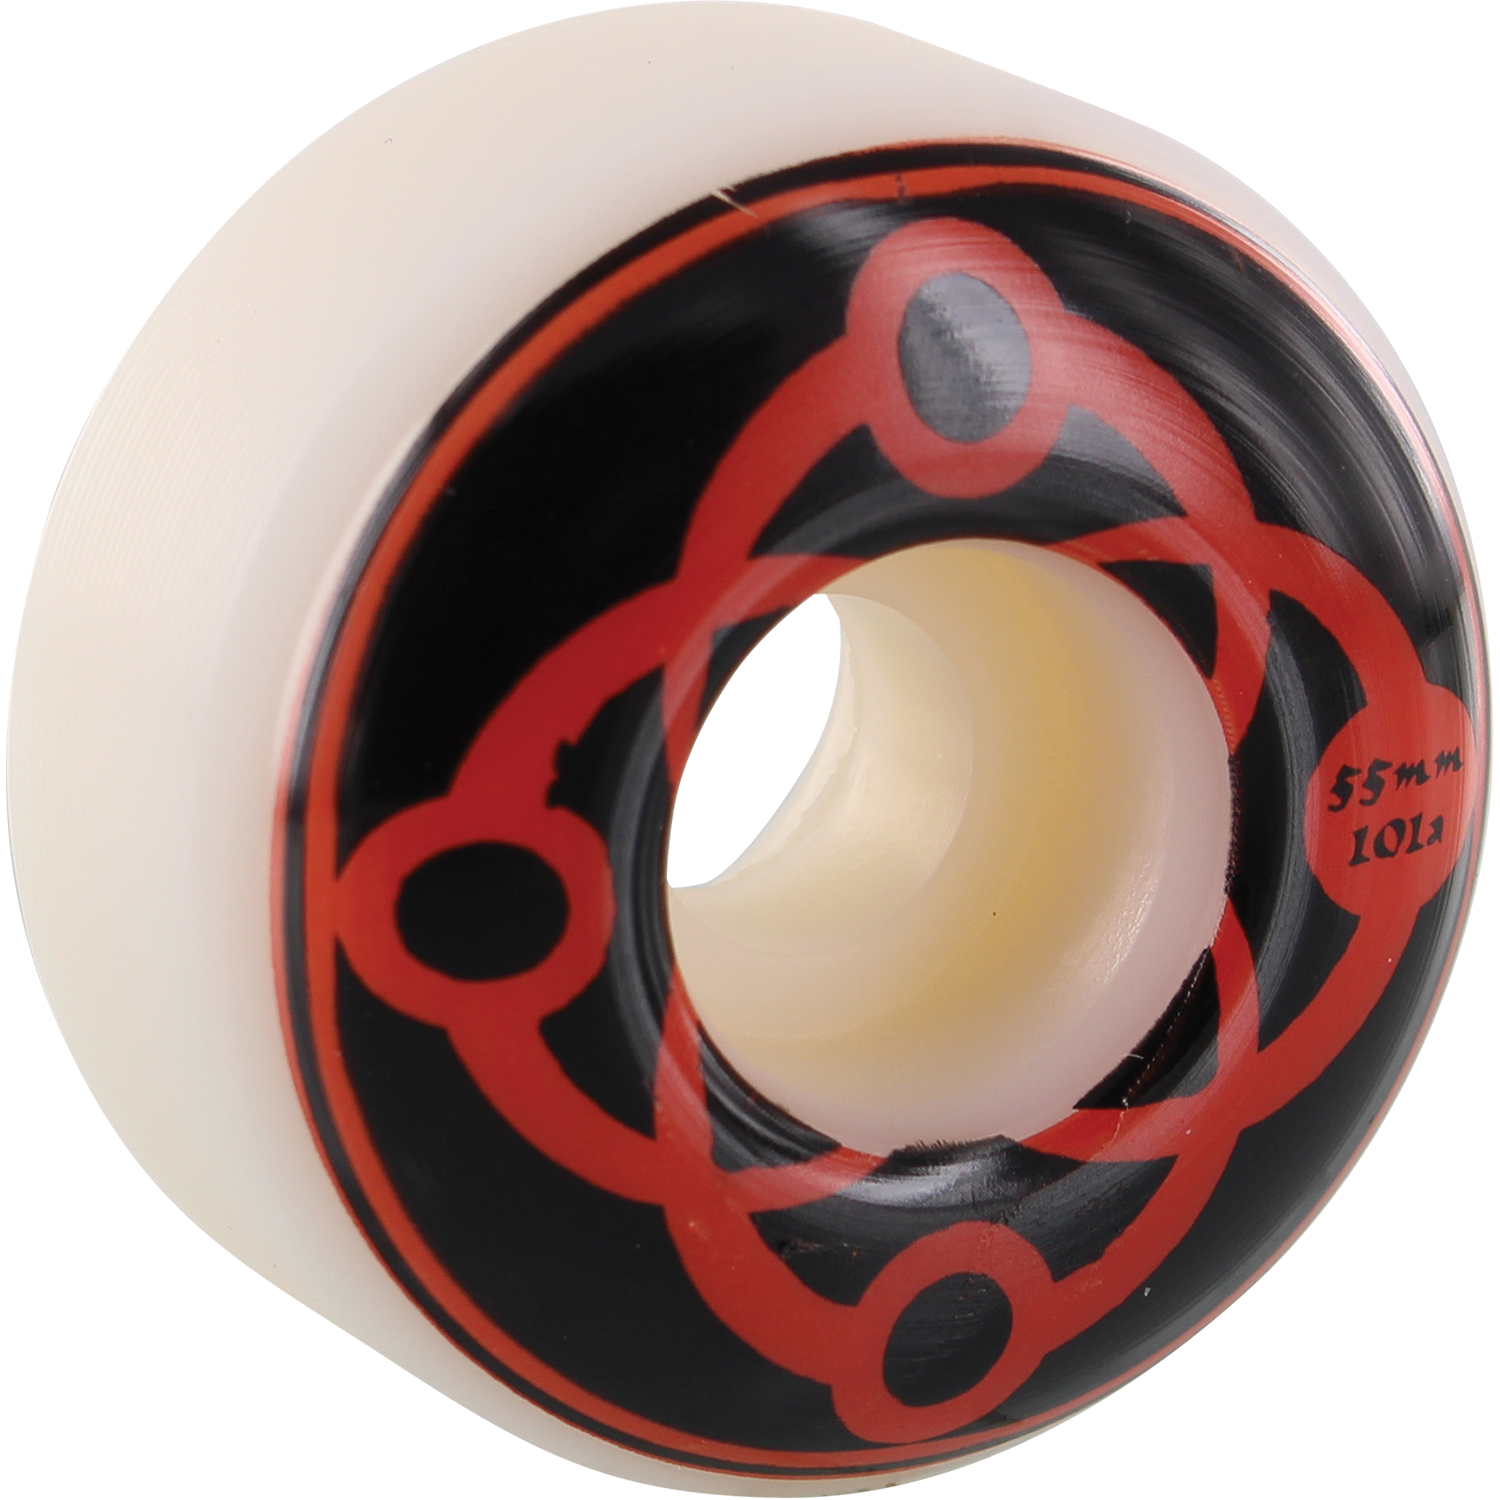 Satori Big Link 55mm 101a White/Black/Red Skateboard Wheels (Set of 4)